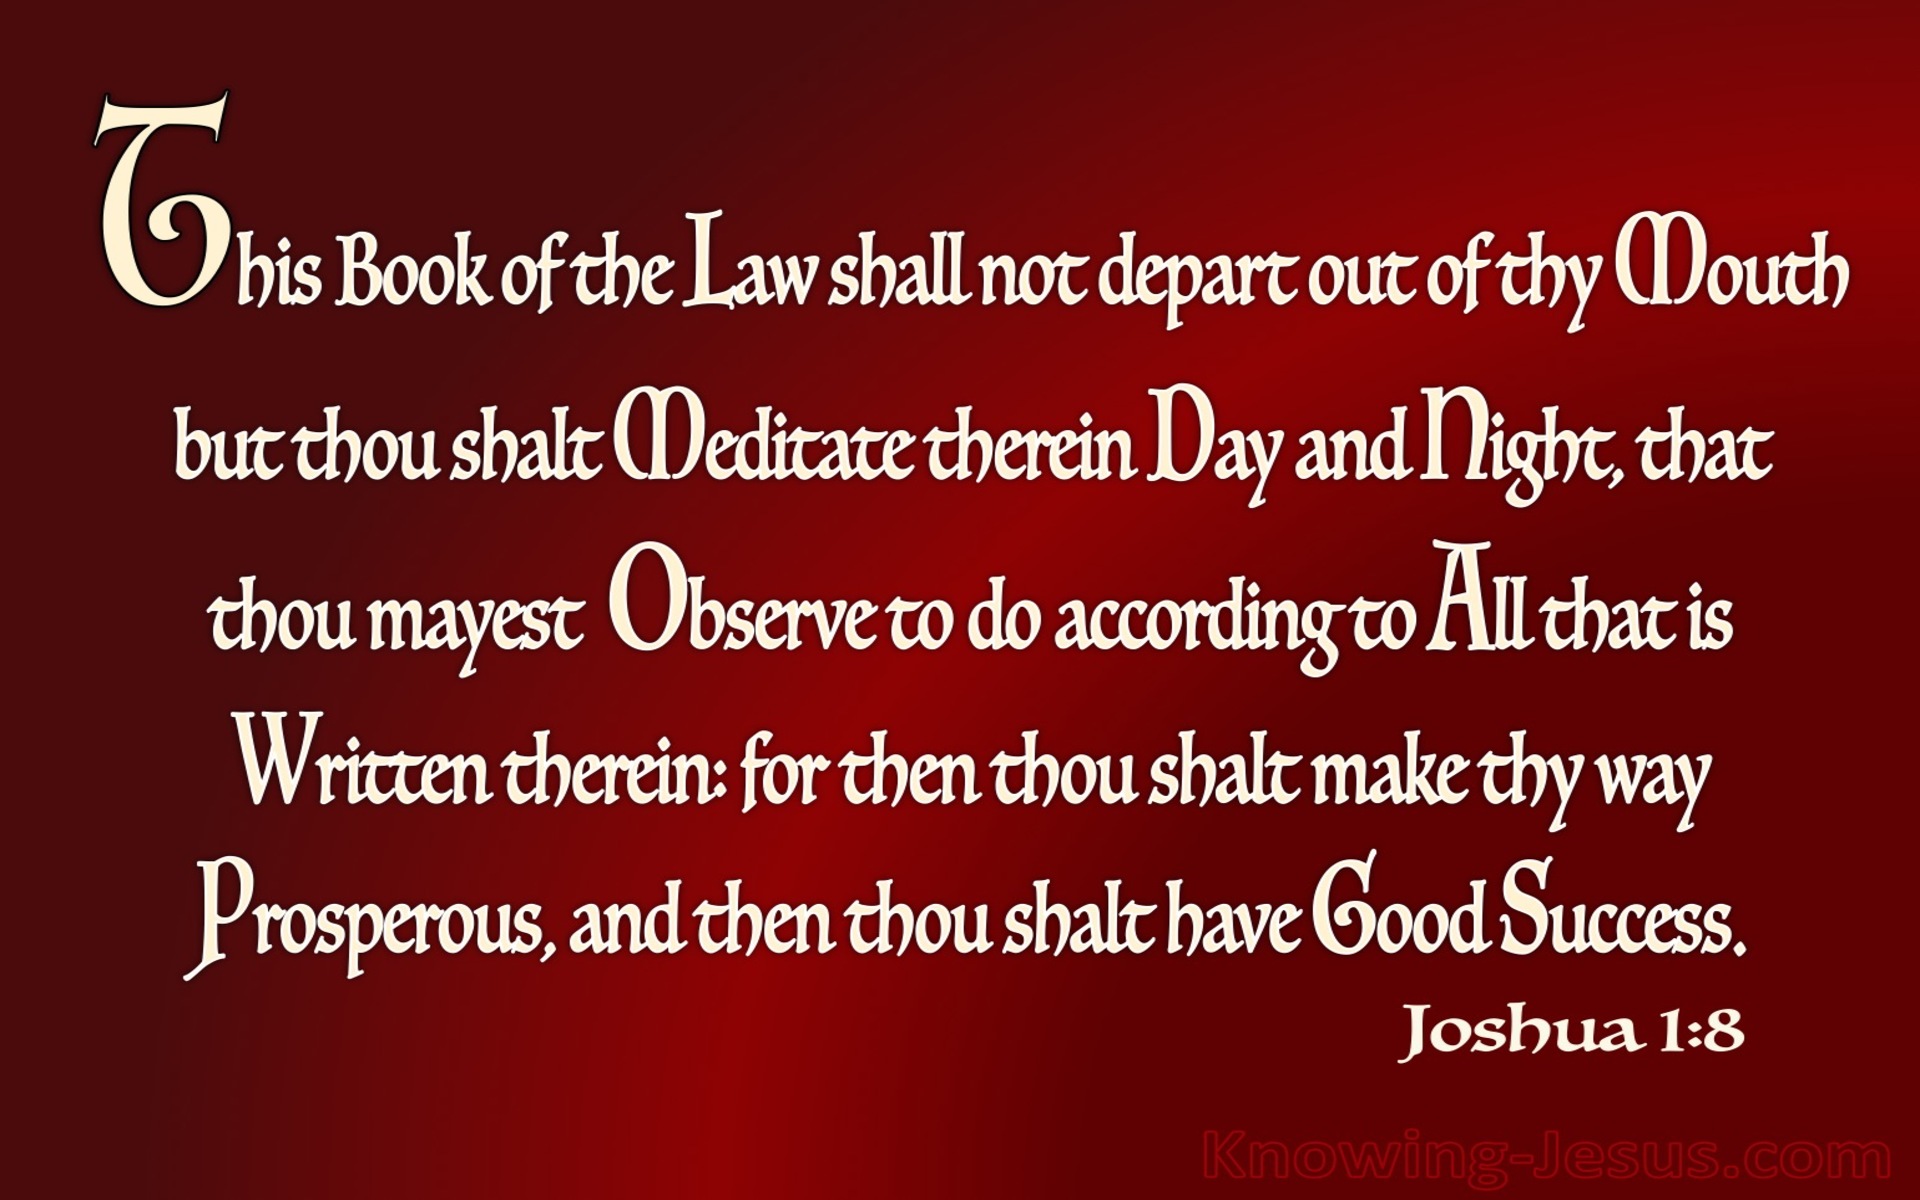 Joshua 1:8 Meditate On God's Word Day And Night (maroon)